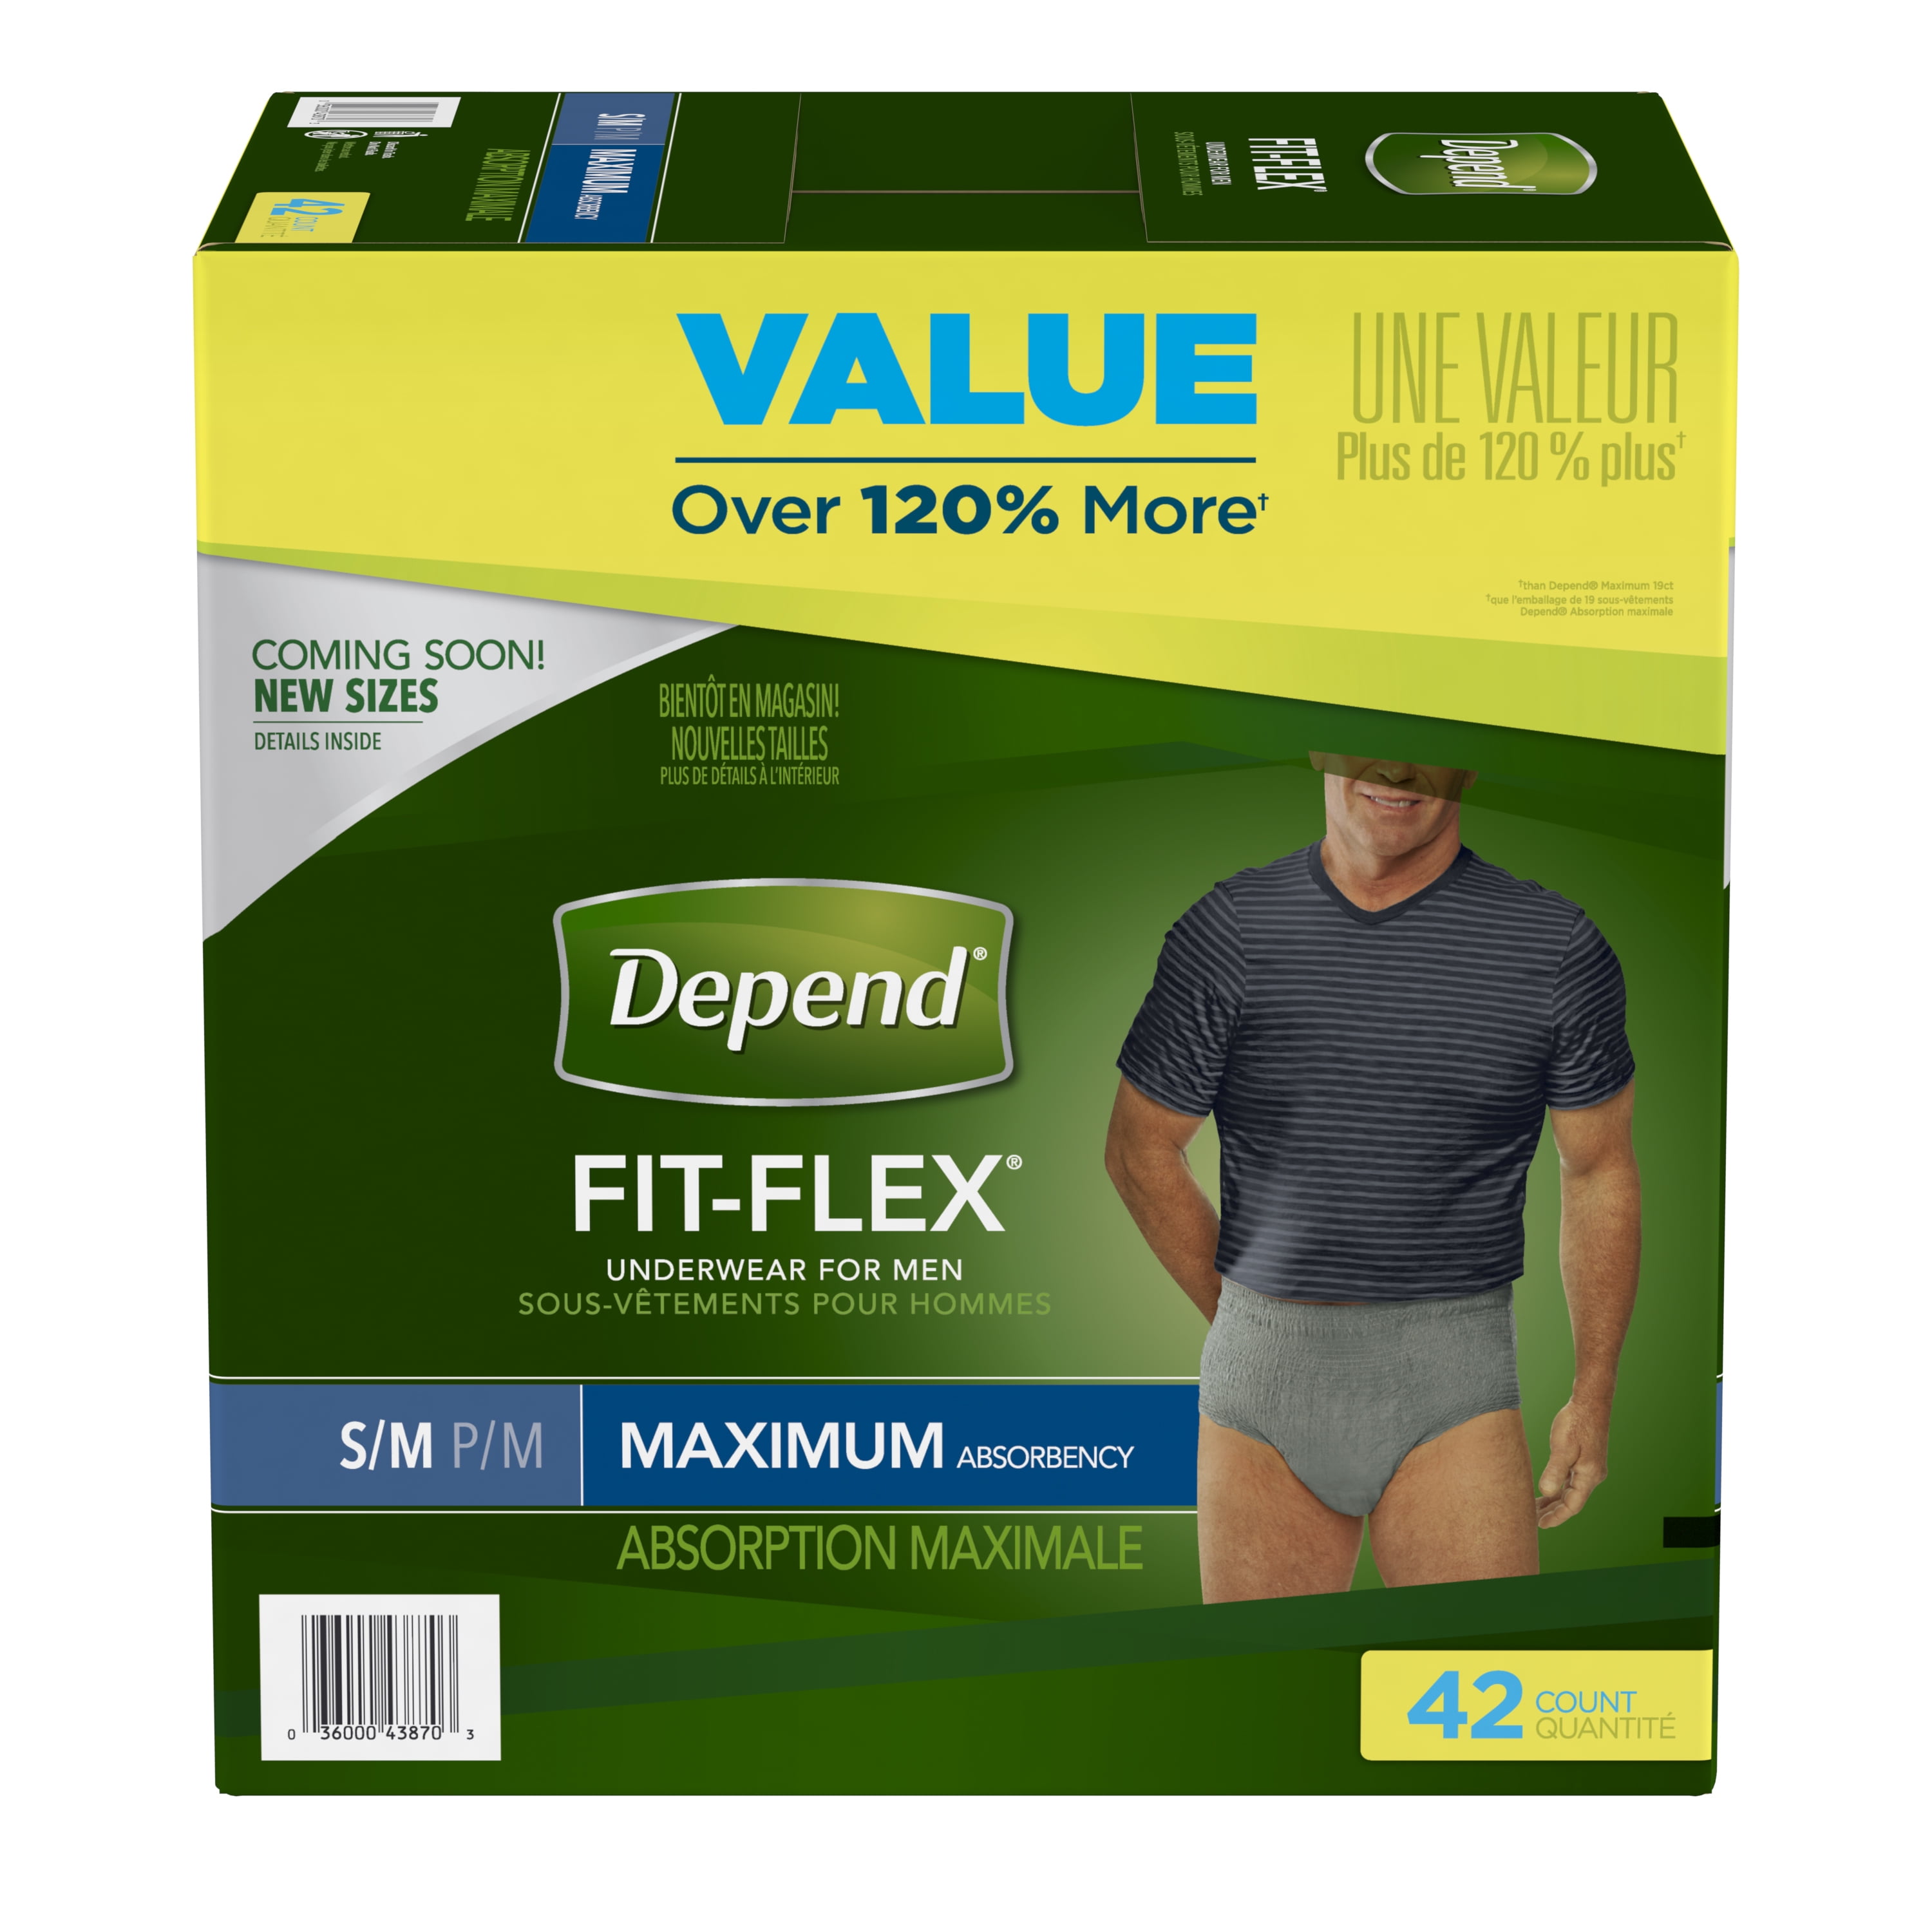 Depend FIT-FLEX Incontinence Underwear for Men, Maximum